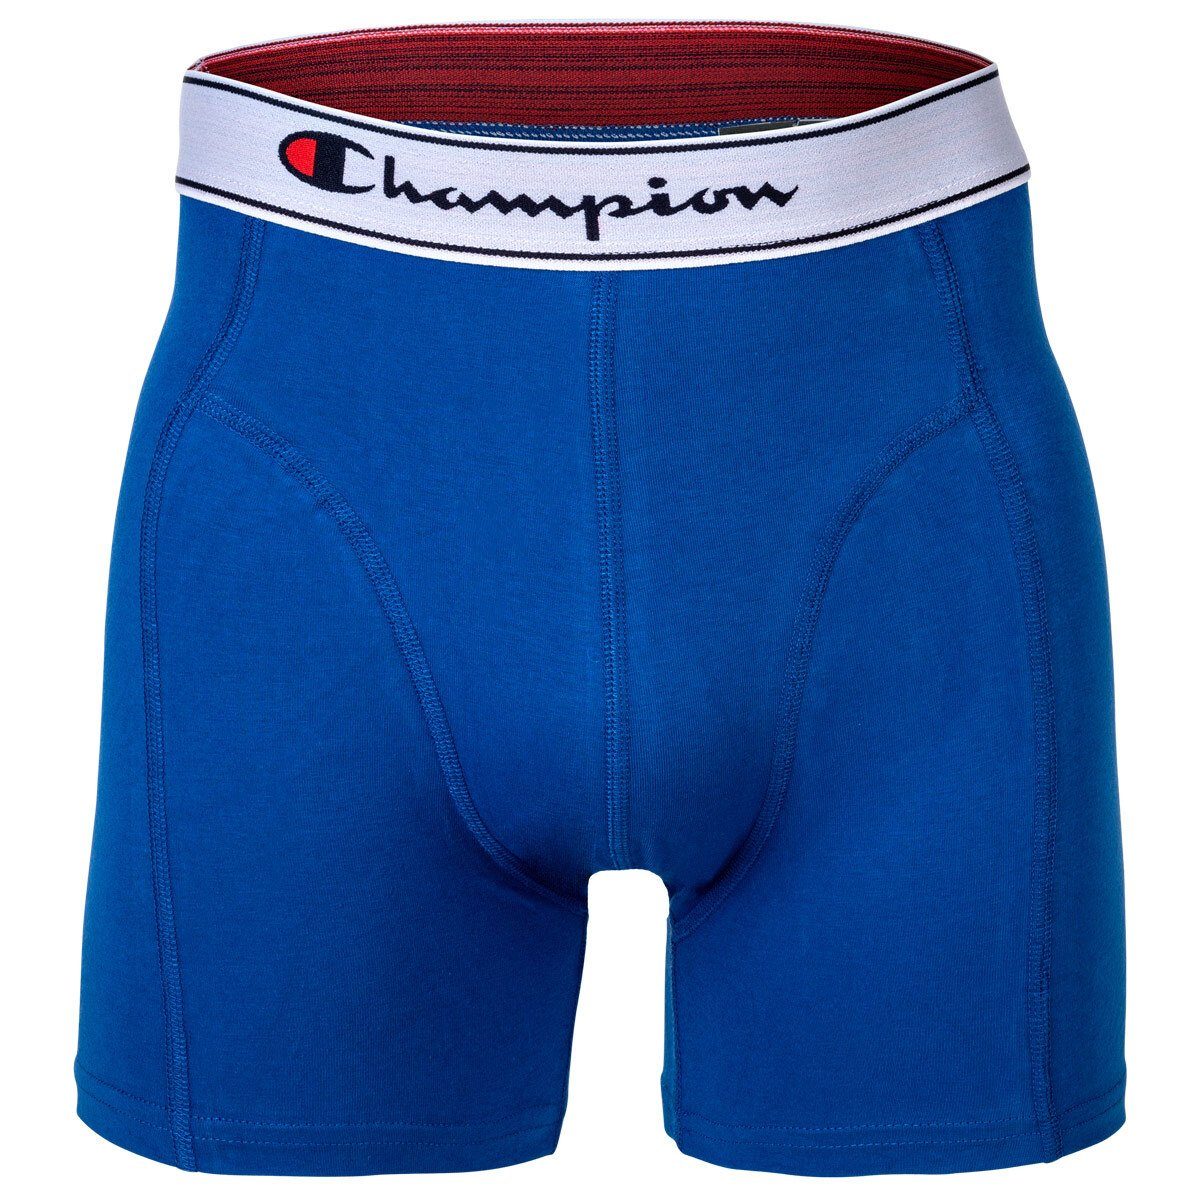 2er Boxershorts, Blau/Marine Boxer Pack - Baumwolle Champion Herren